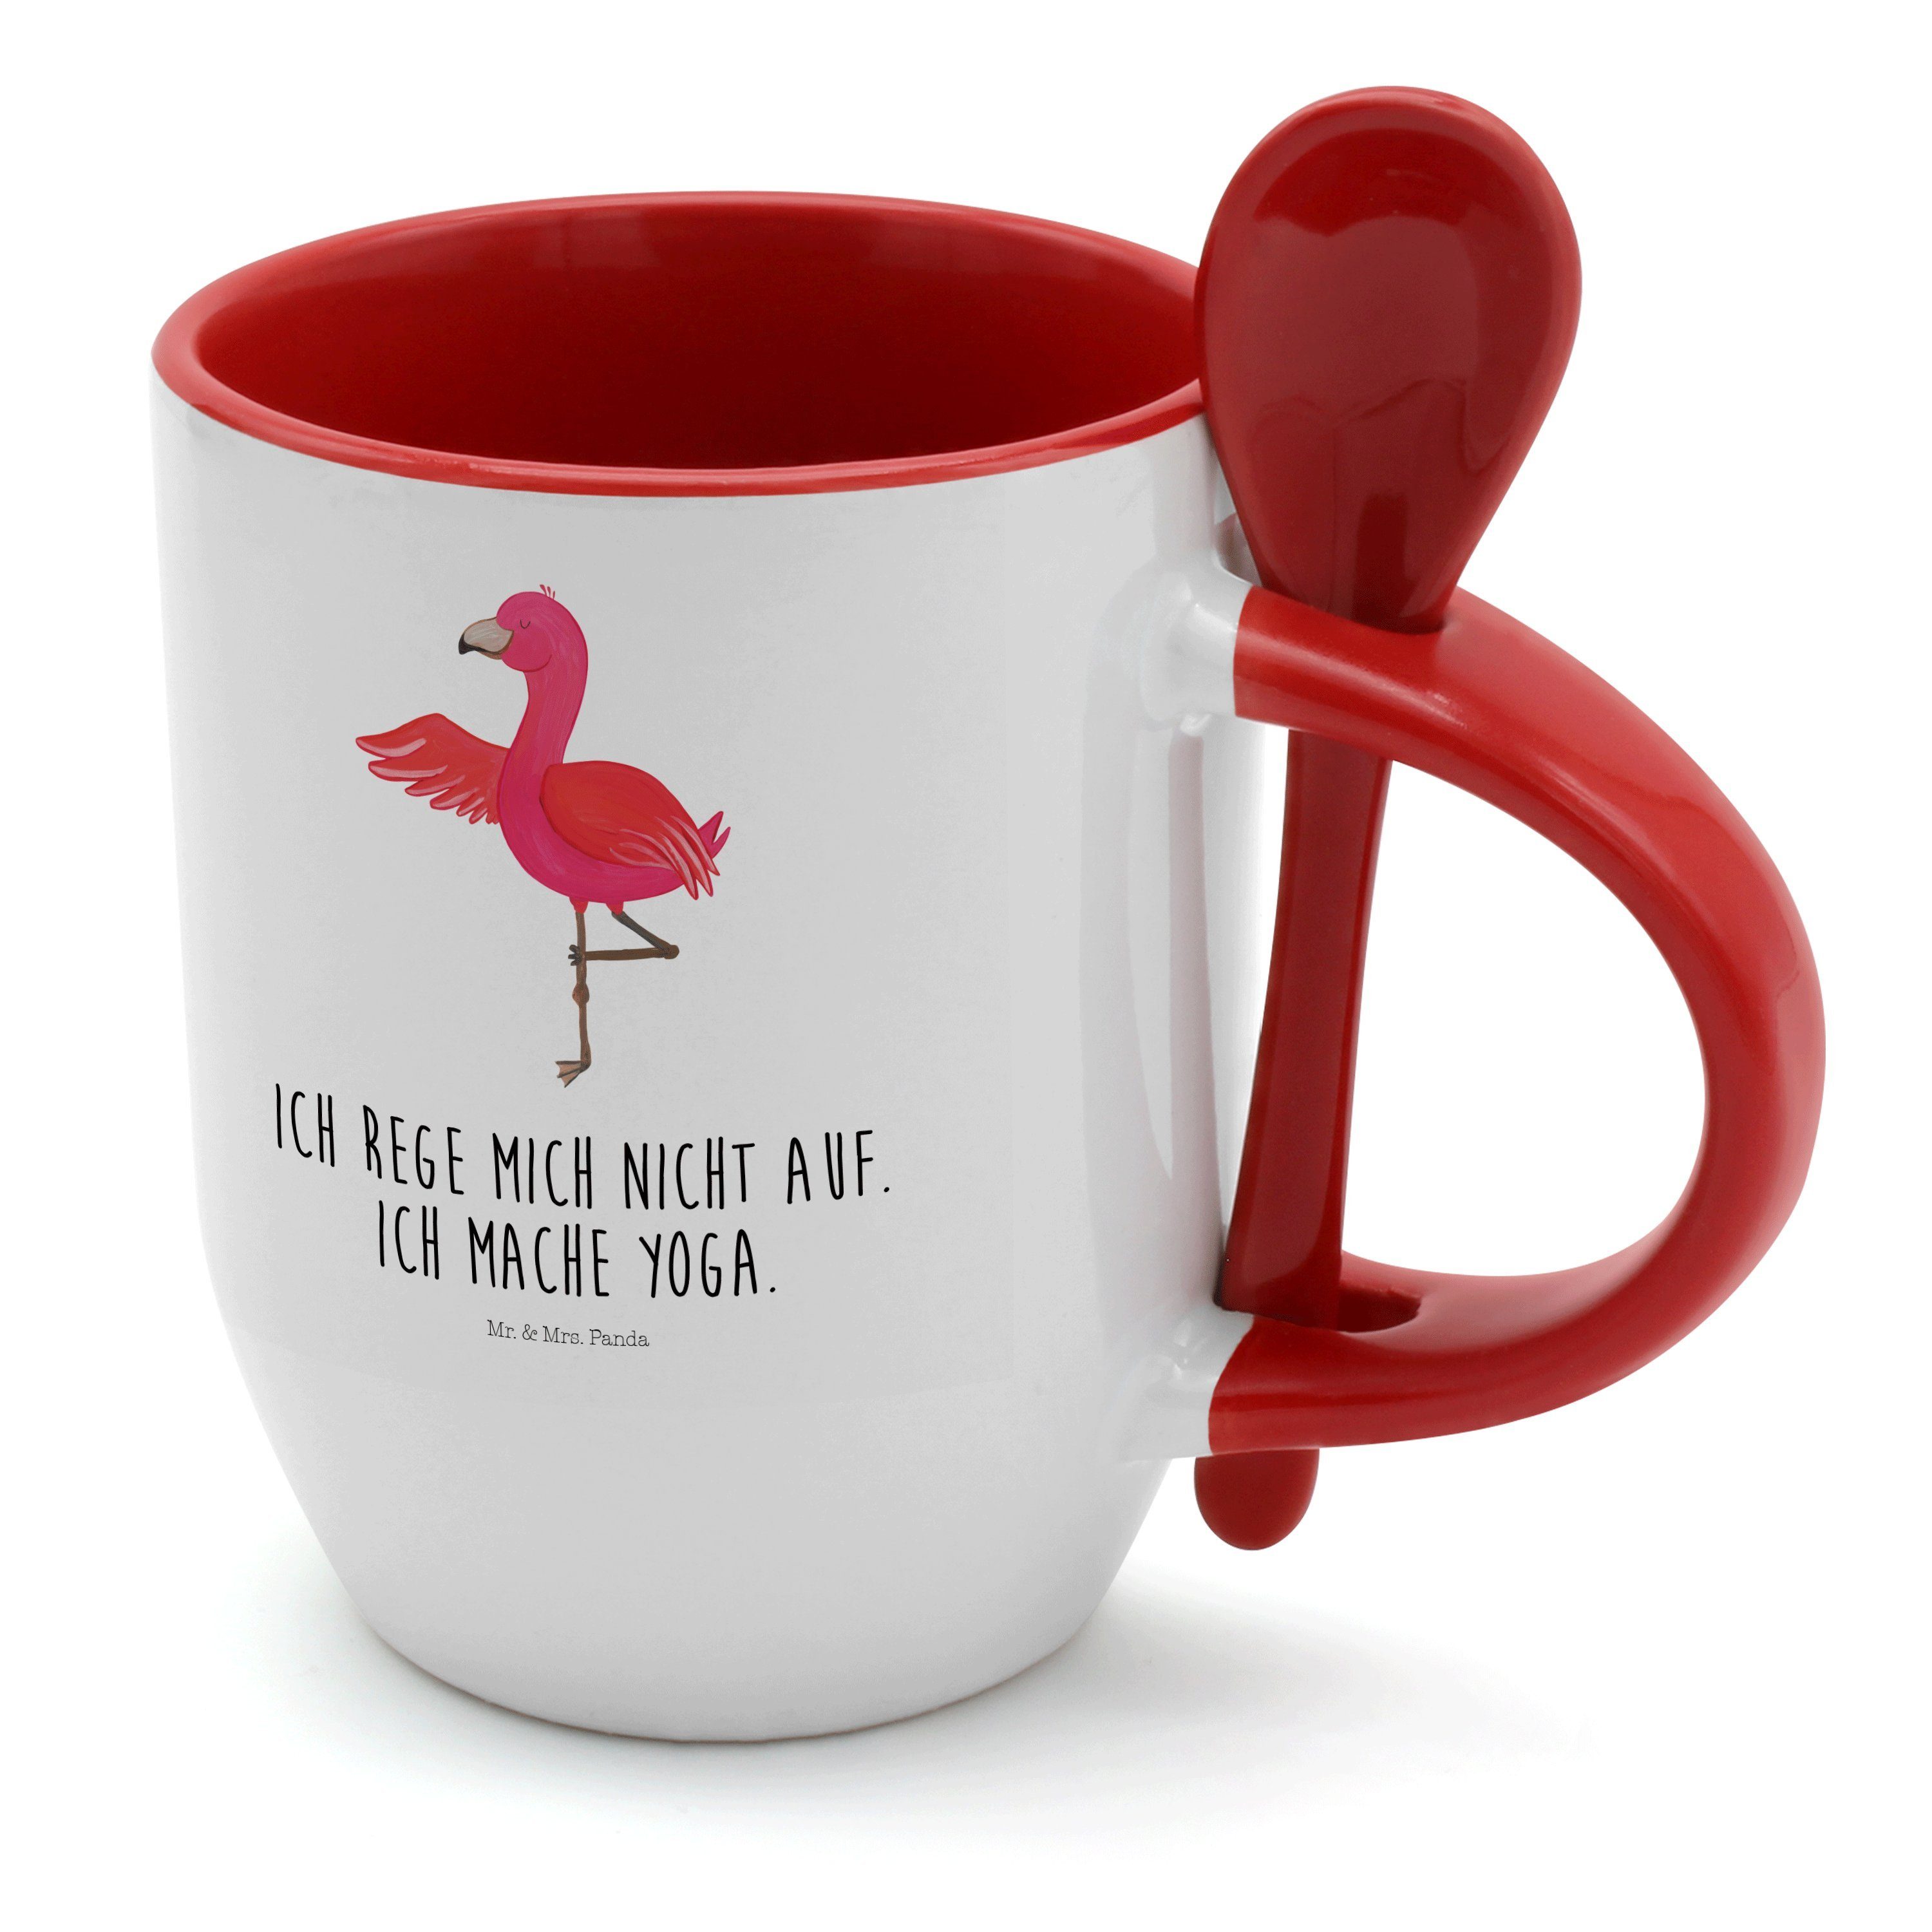 Mr. & Mrs. Panda Tasse Flamingo Yoga - Weiß - Geschenk, Tasse, Achtsamkeit, Rosa, Kaffeetass, Keramik